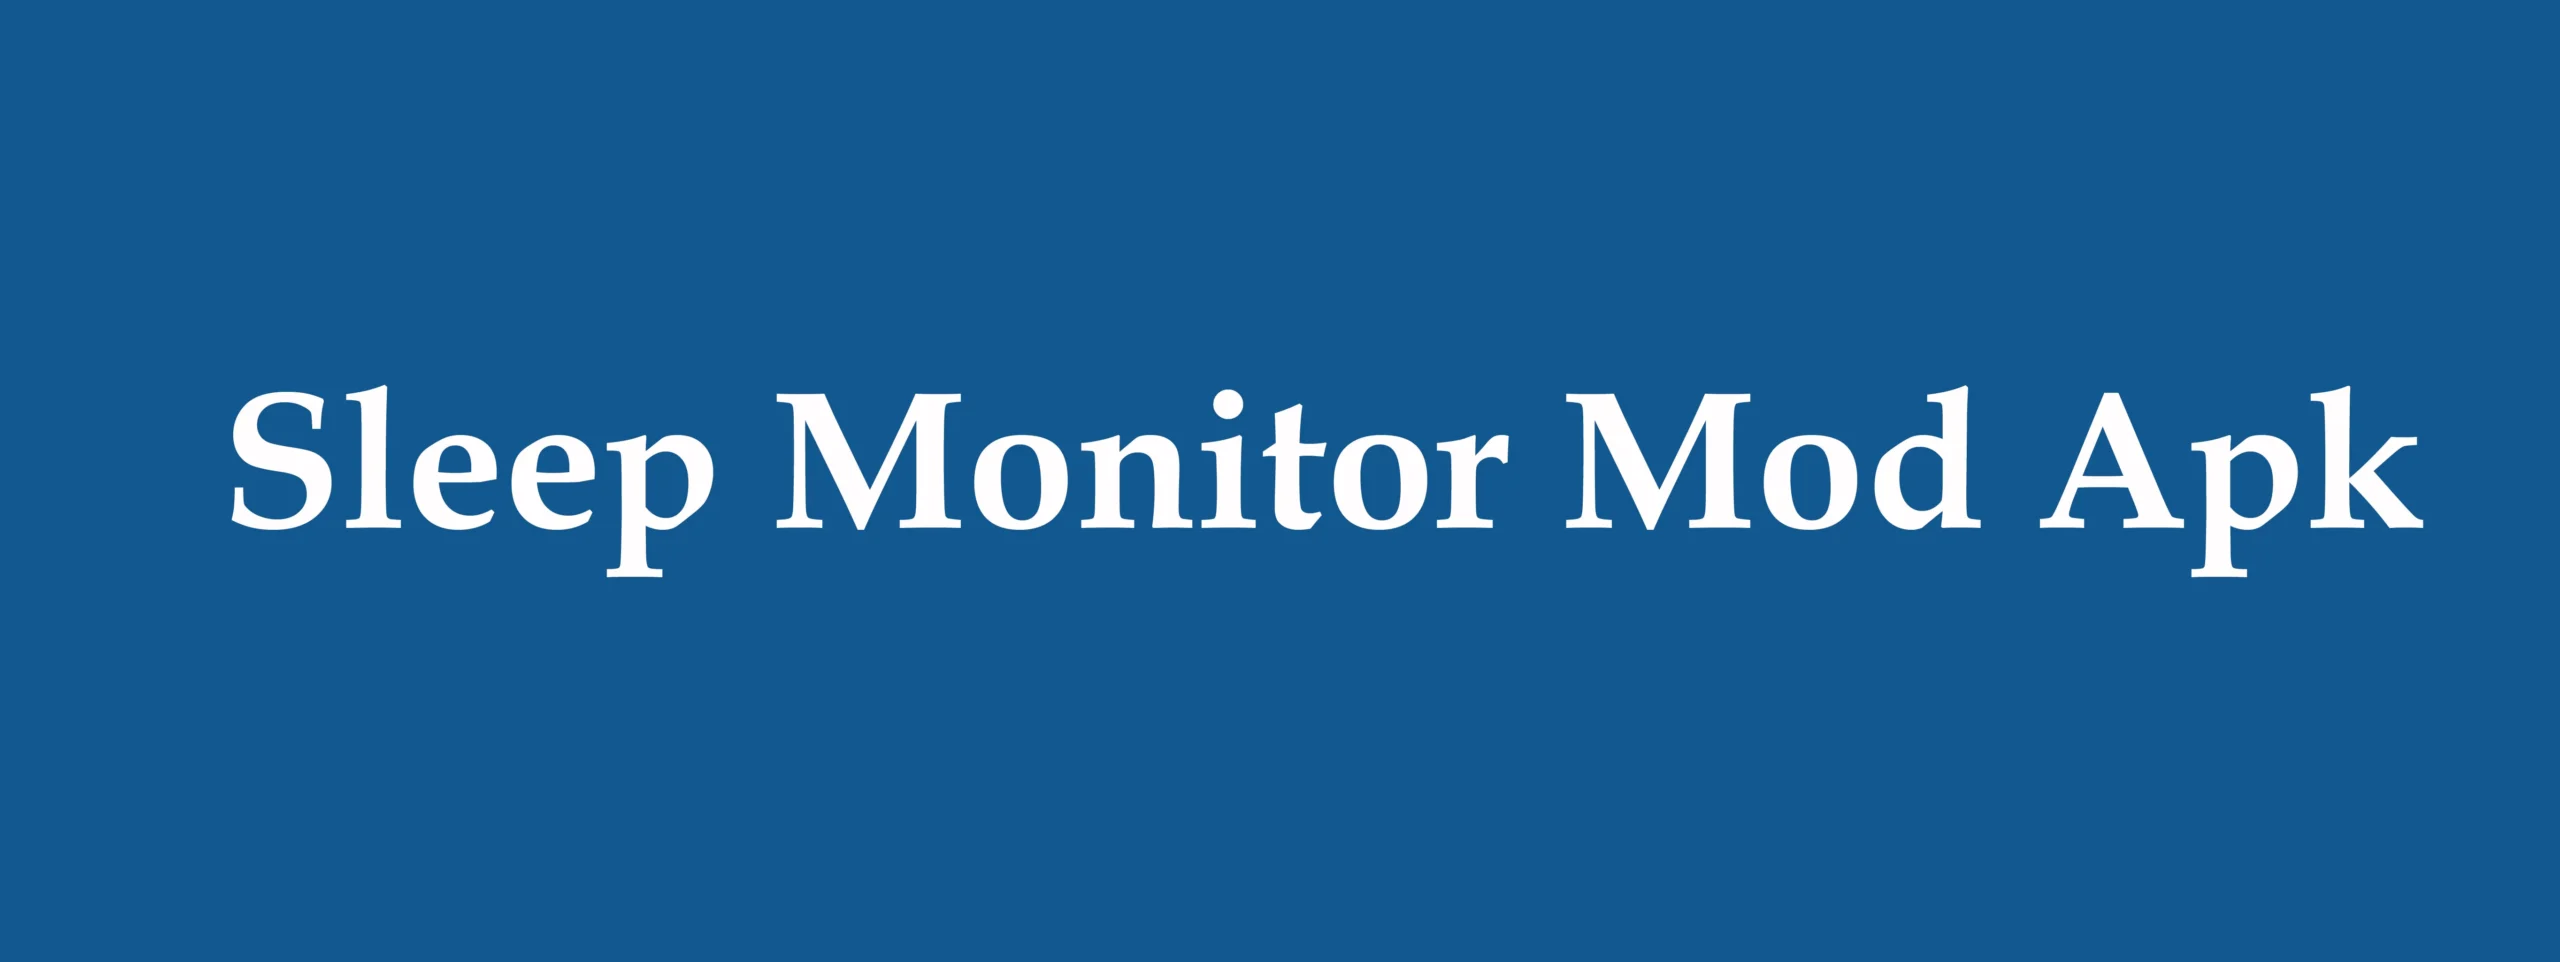 Sleep Monitor MOD APK V2.6.7.1